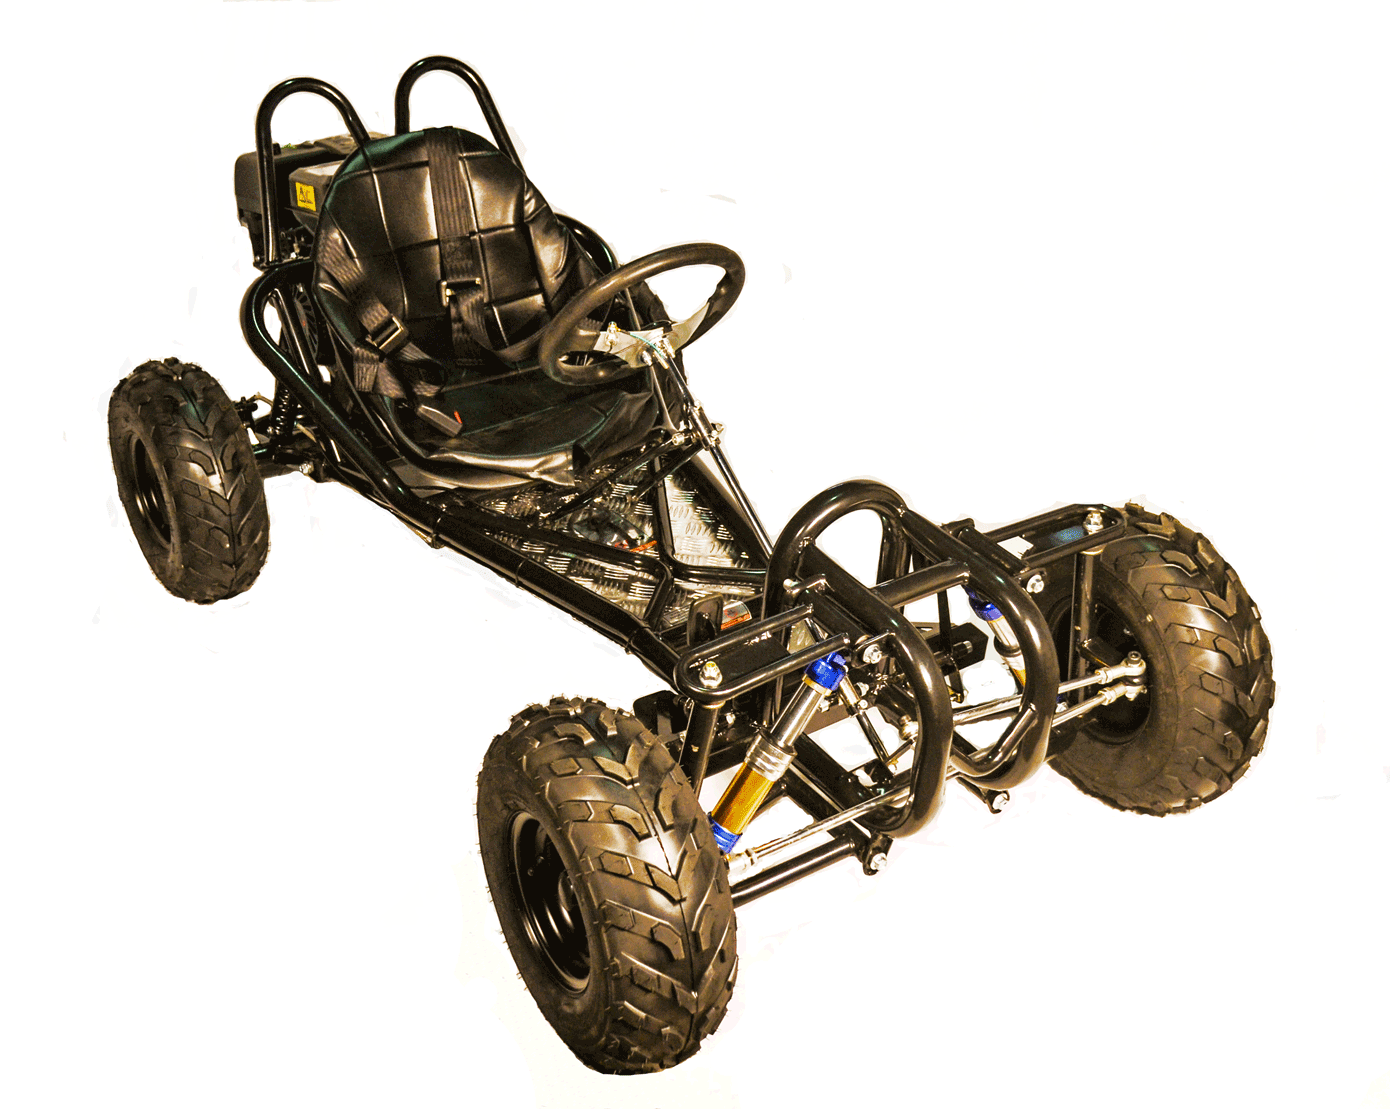 Go Kart 270 cc 9 hp Engine with Front Suspension Go Karts Australia Bulldog